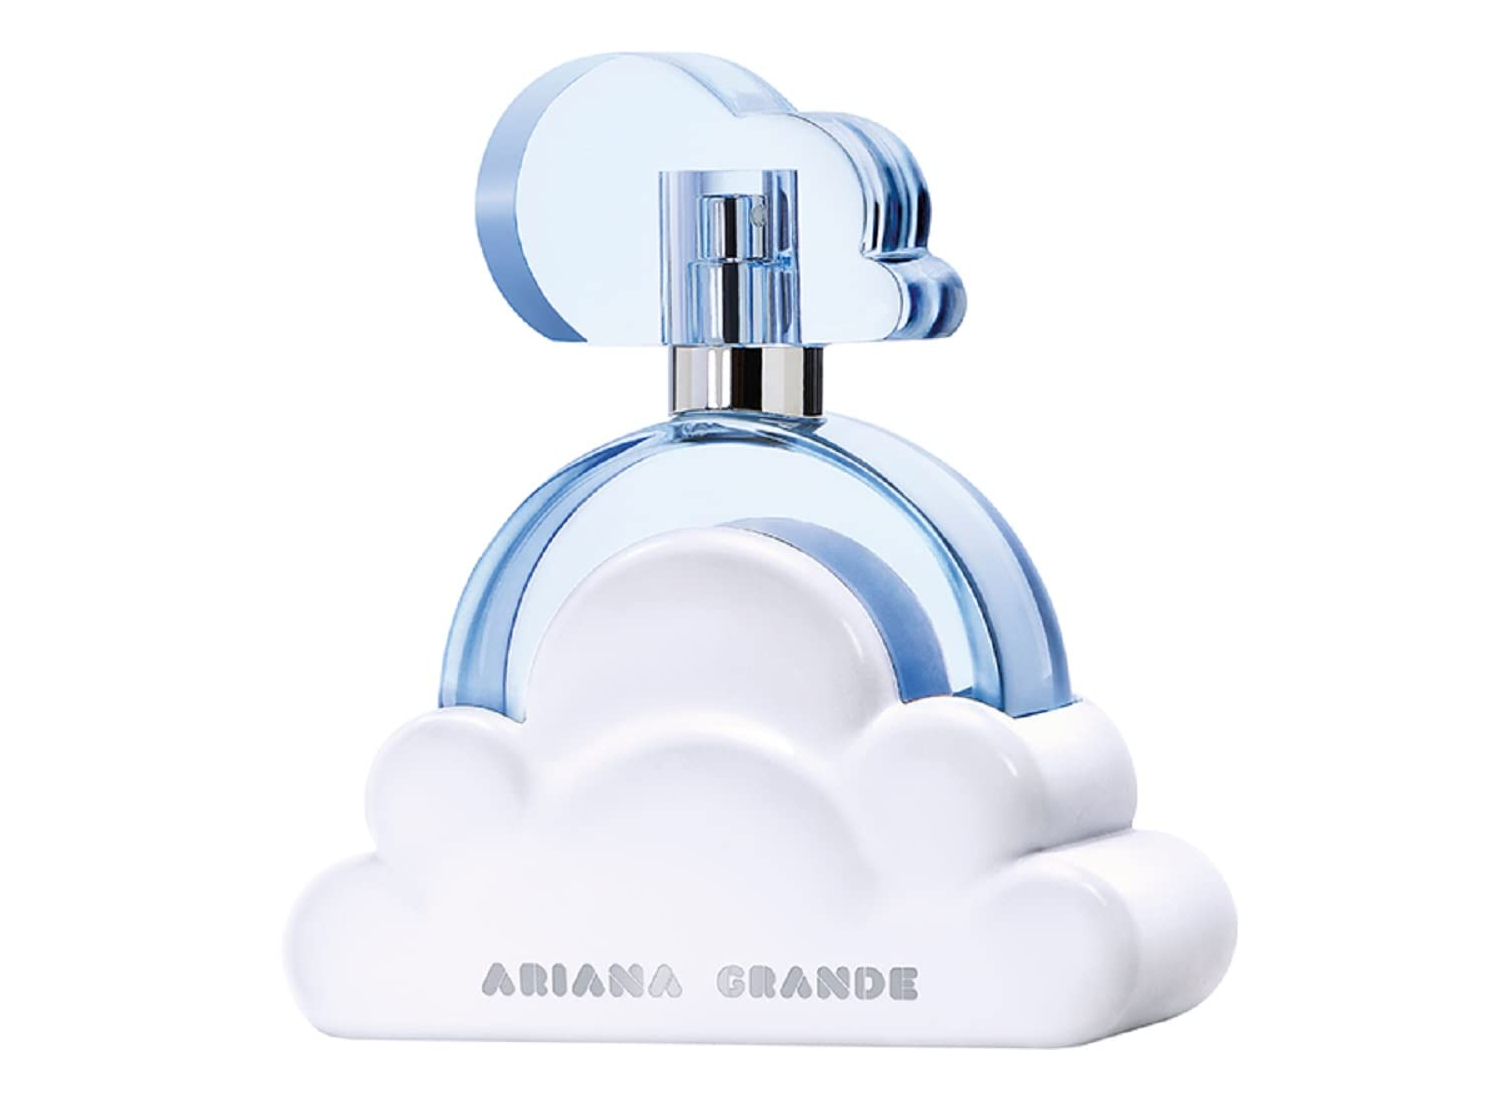 Ariana Grande's Cloud perfume bottle.